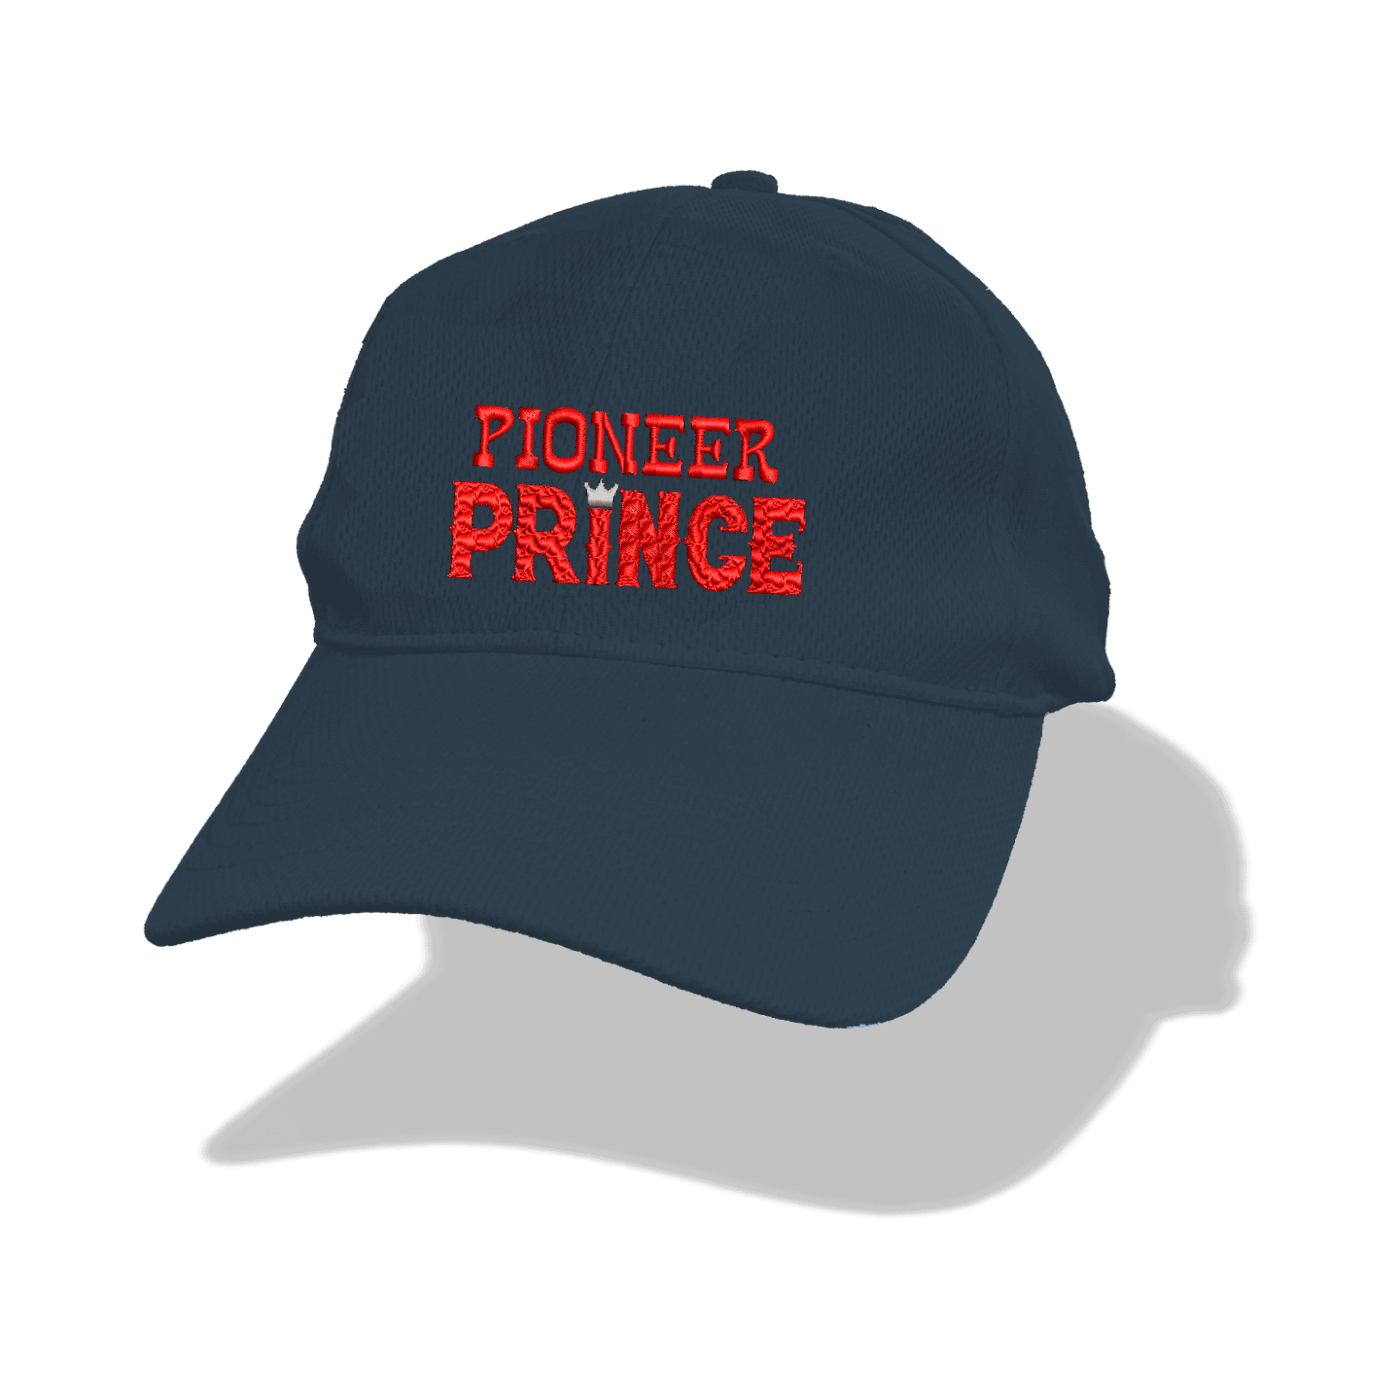 Pioneer Prince Velocity Perfomance Hat